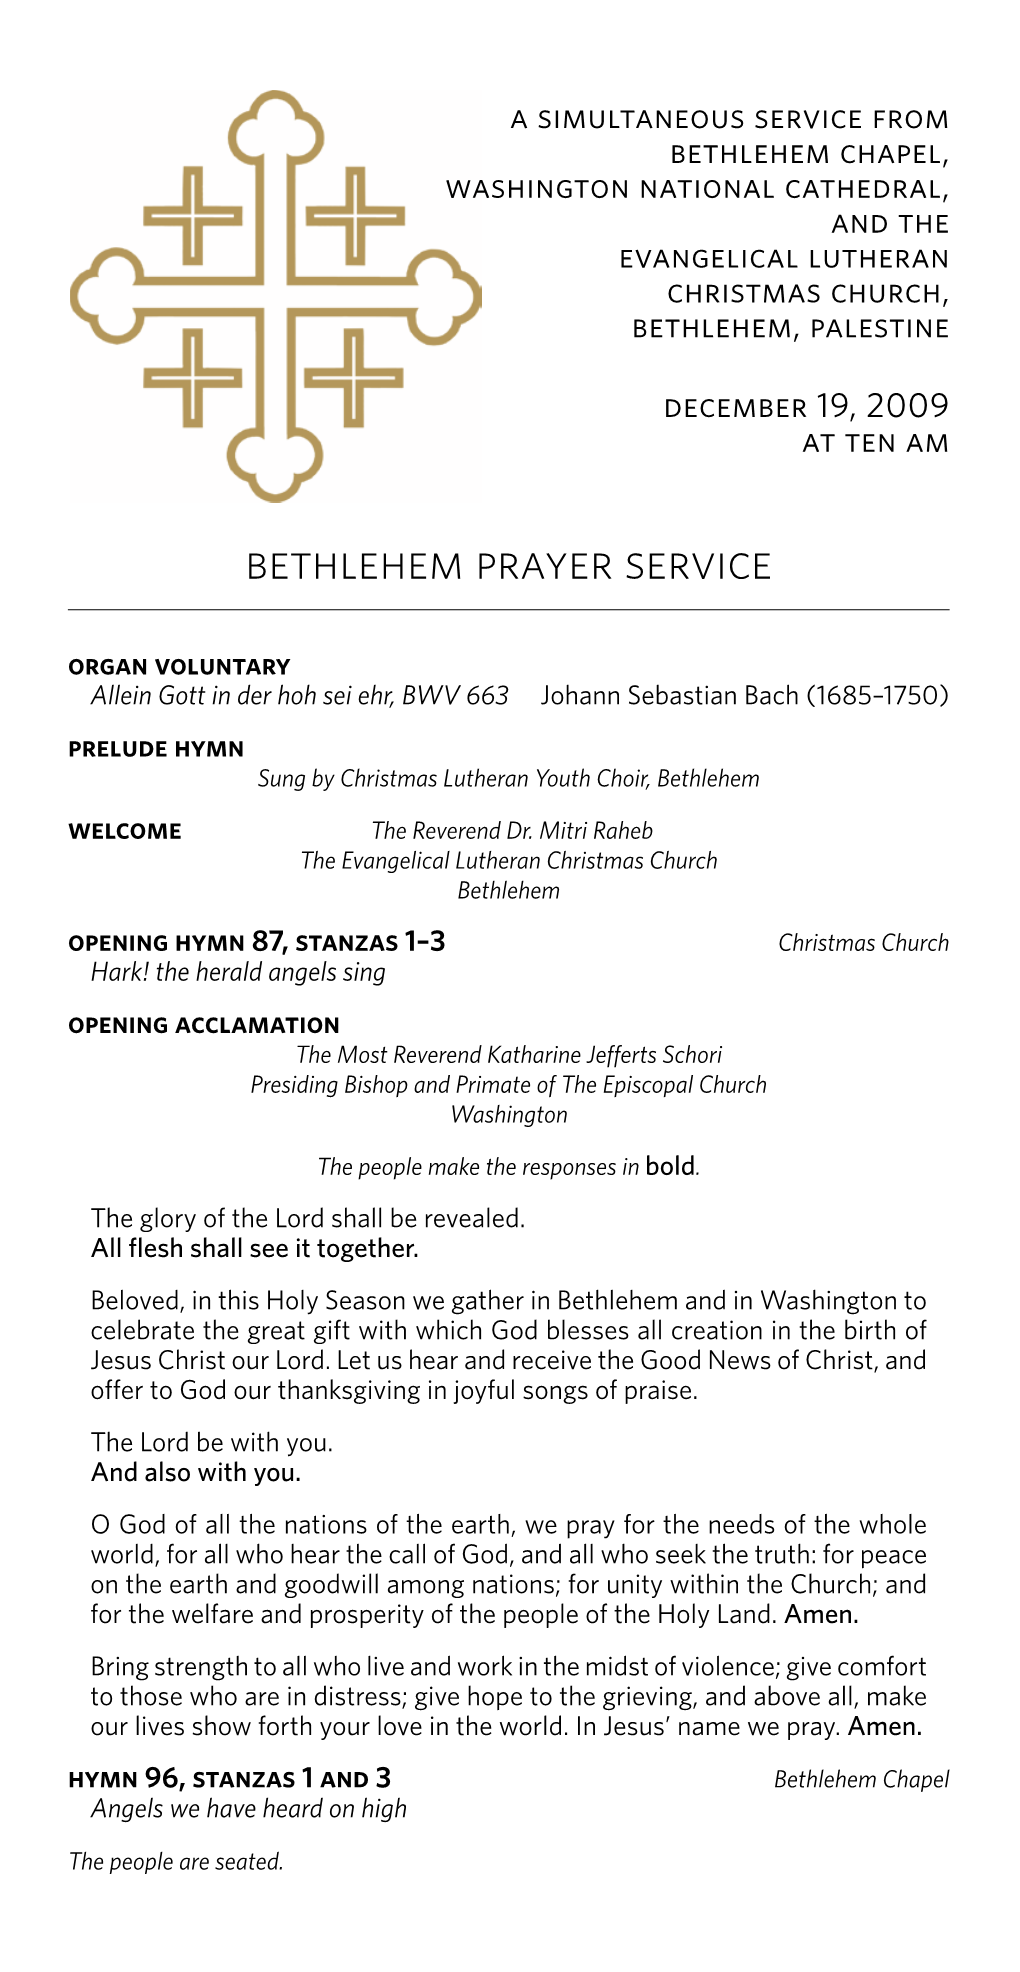 Bethlehem Prayer Service, December 19, 2009